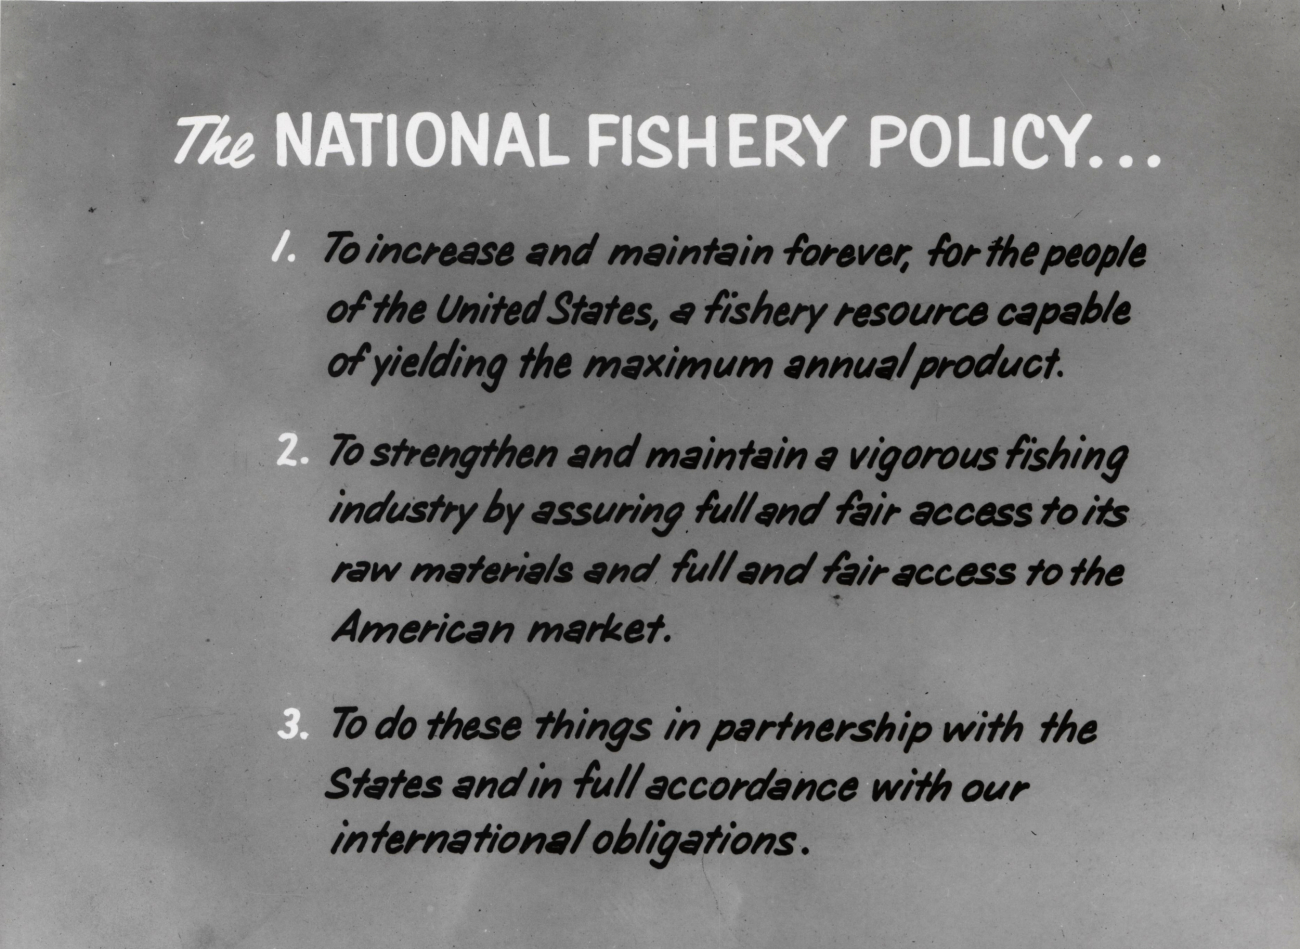 National Fishery Policy (circa 1958)